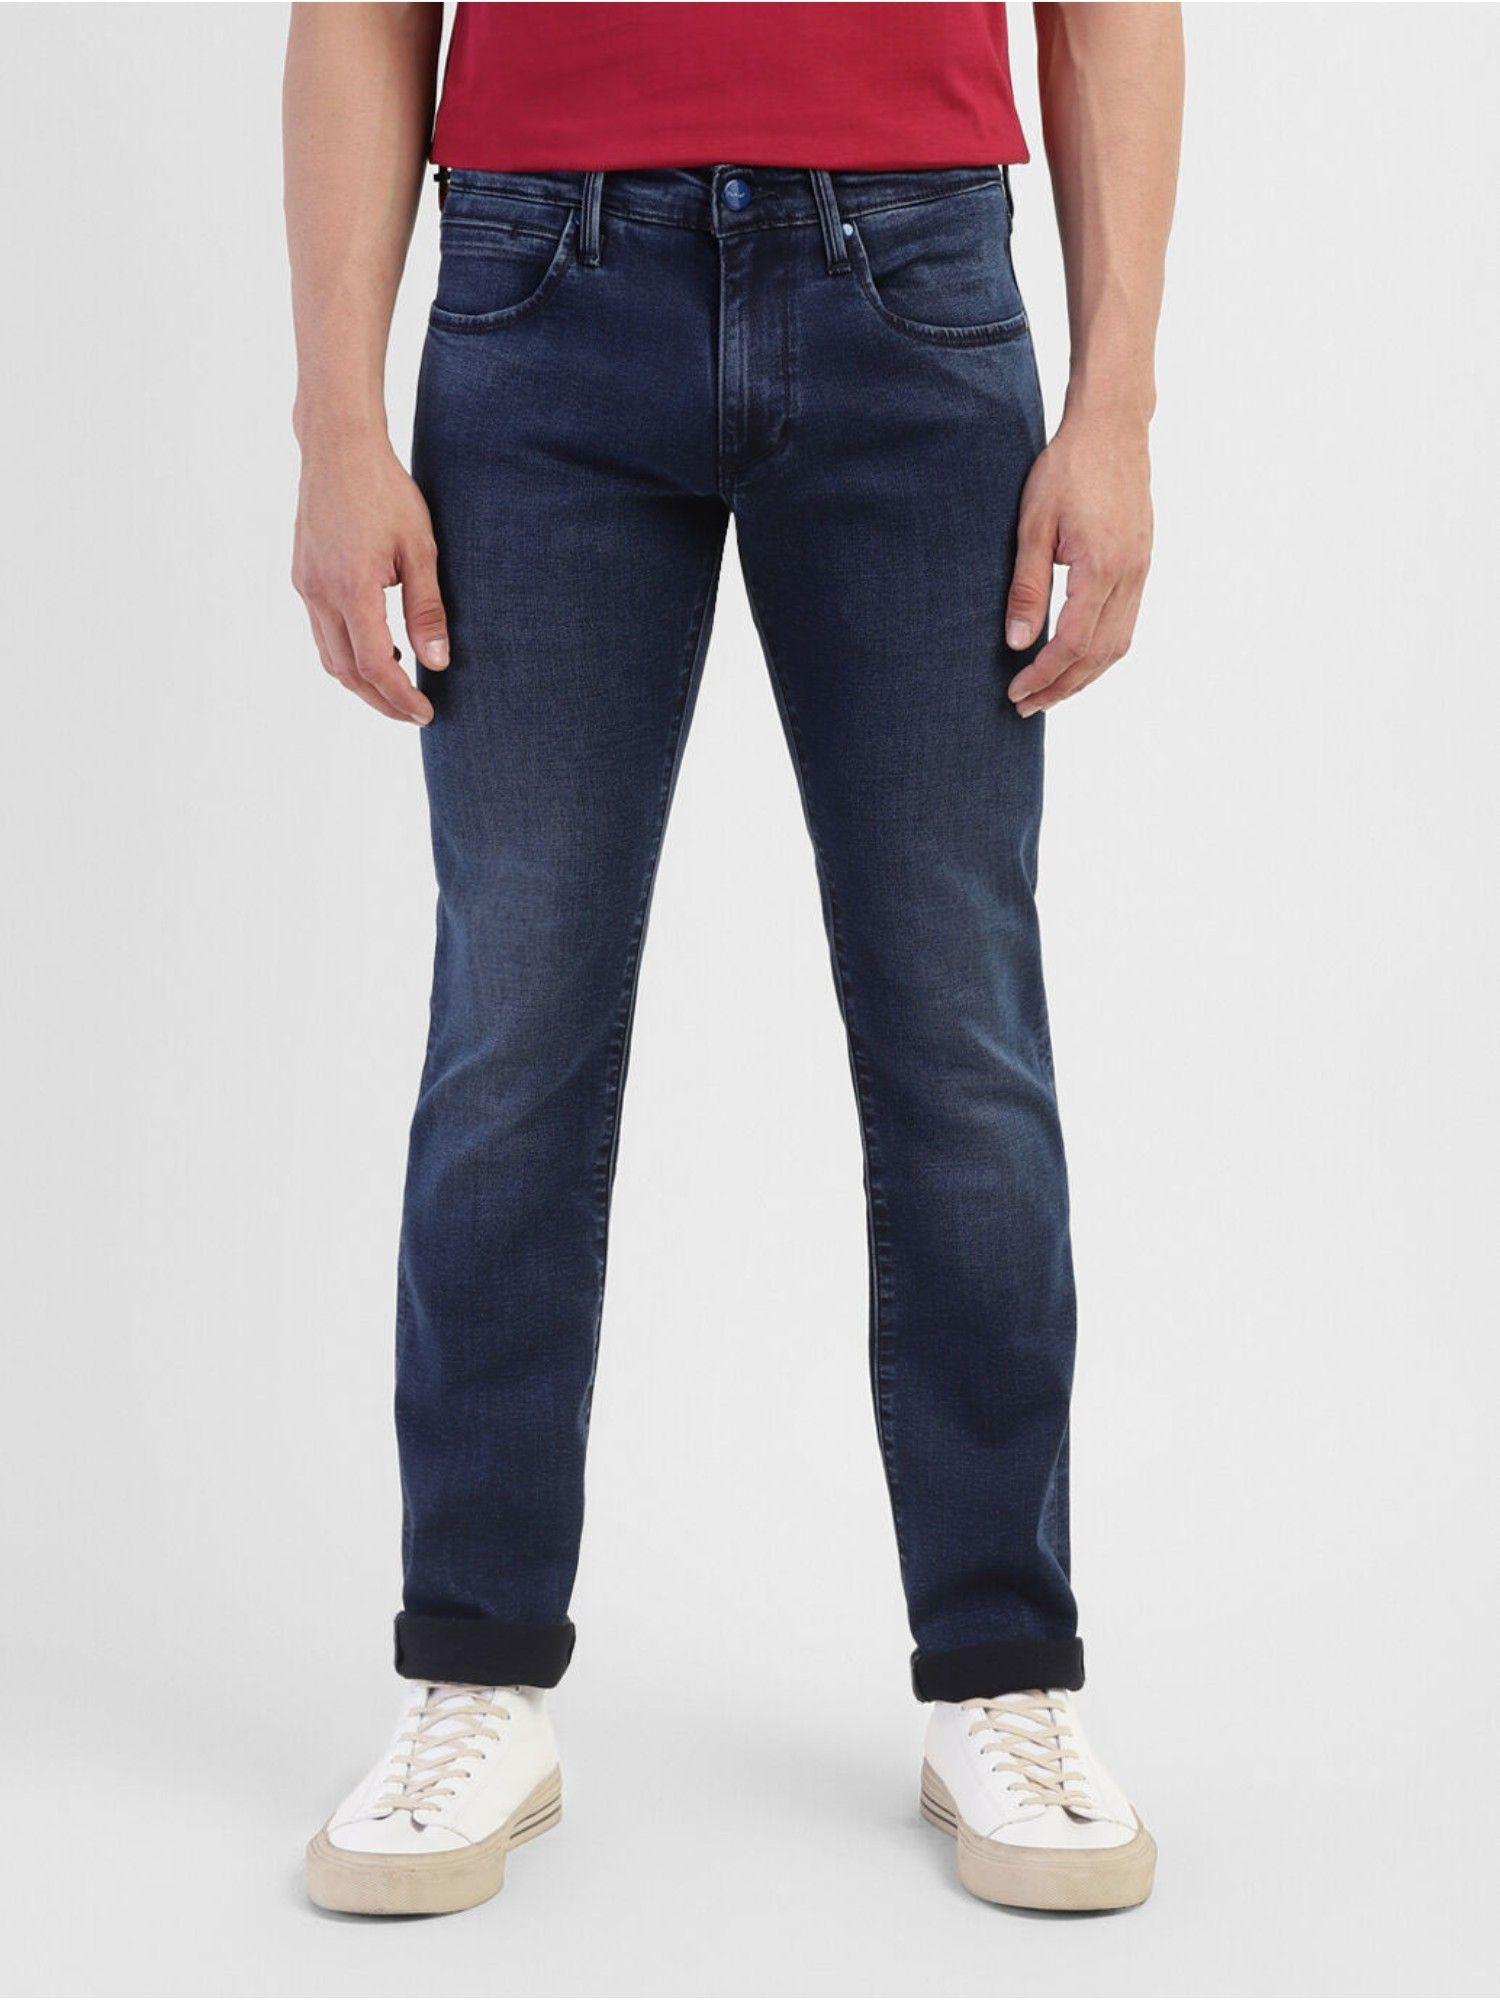 mens 65504 blue skinny jeans